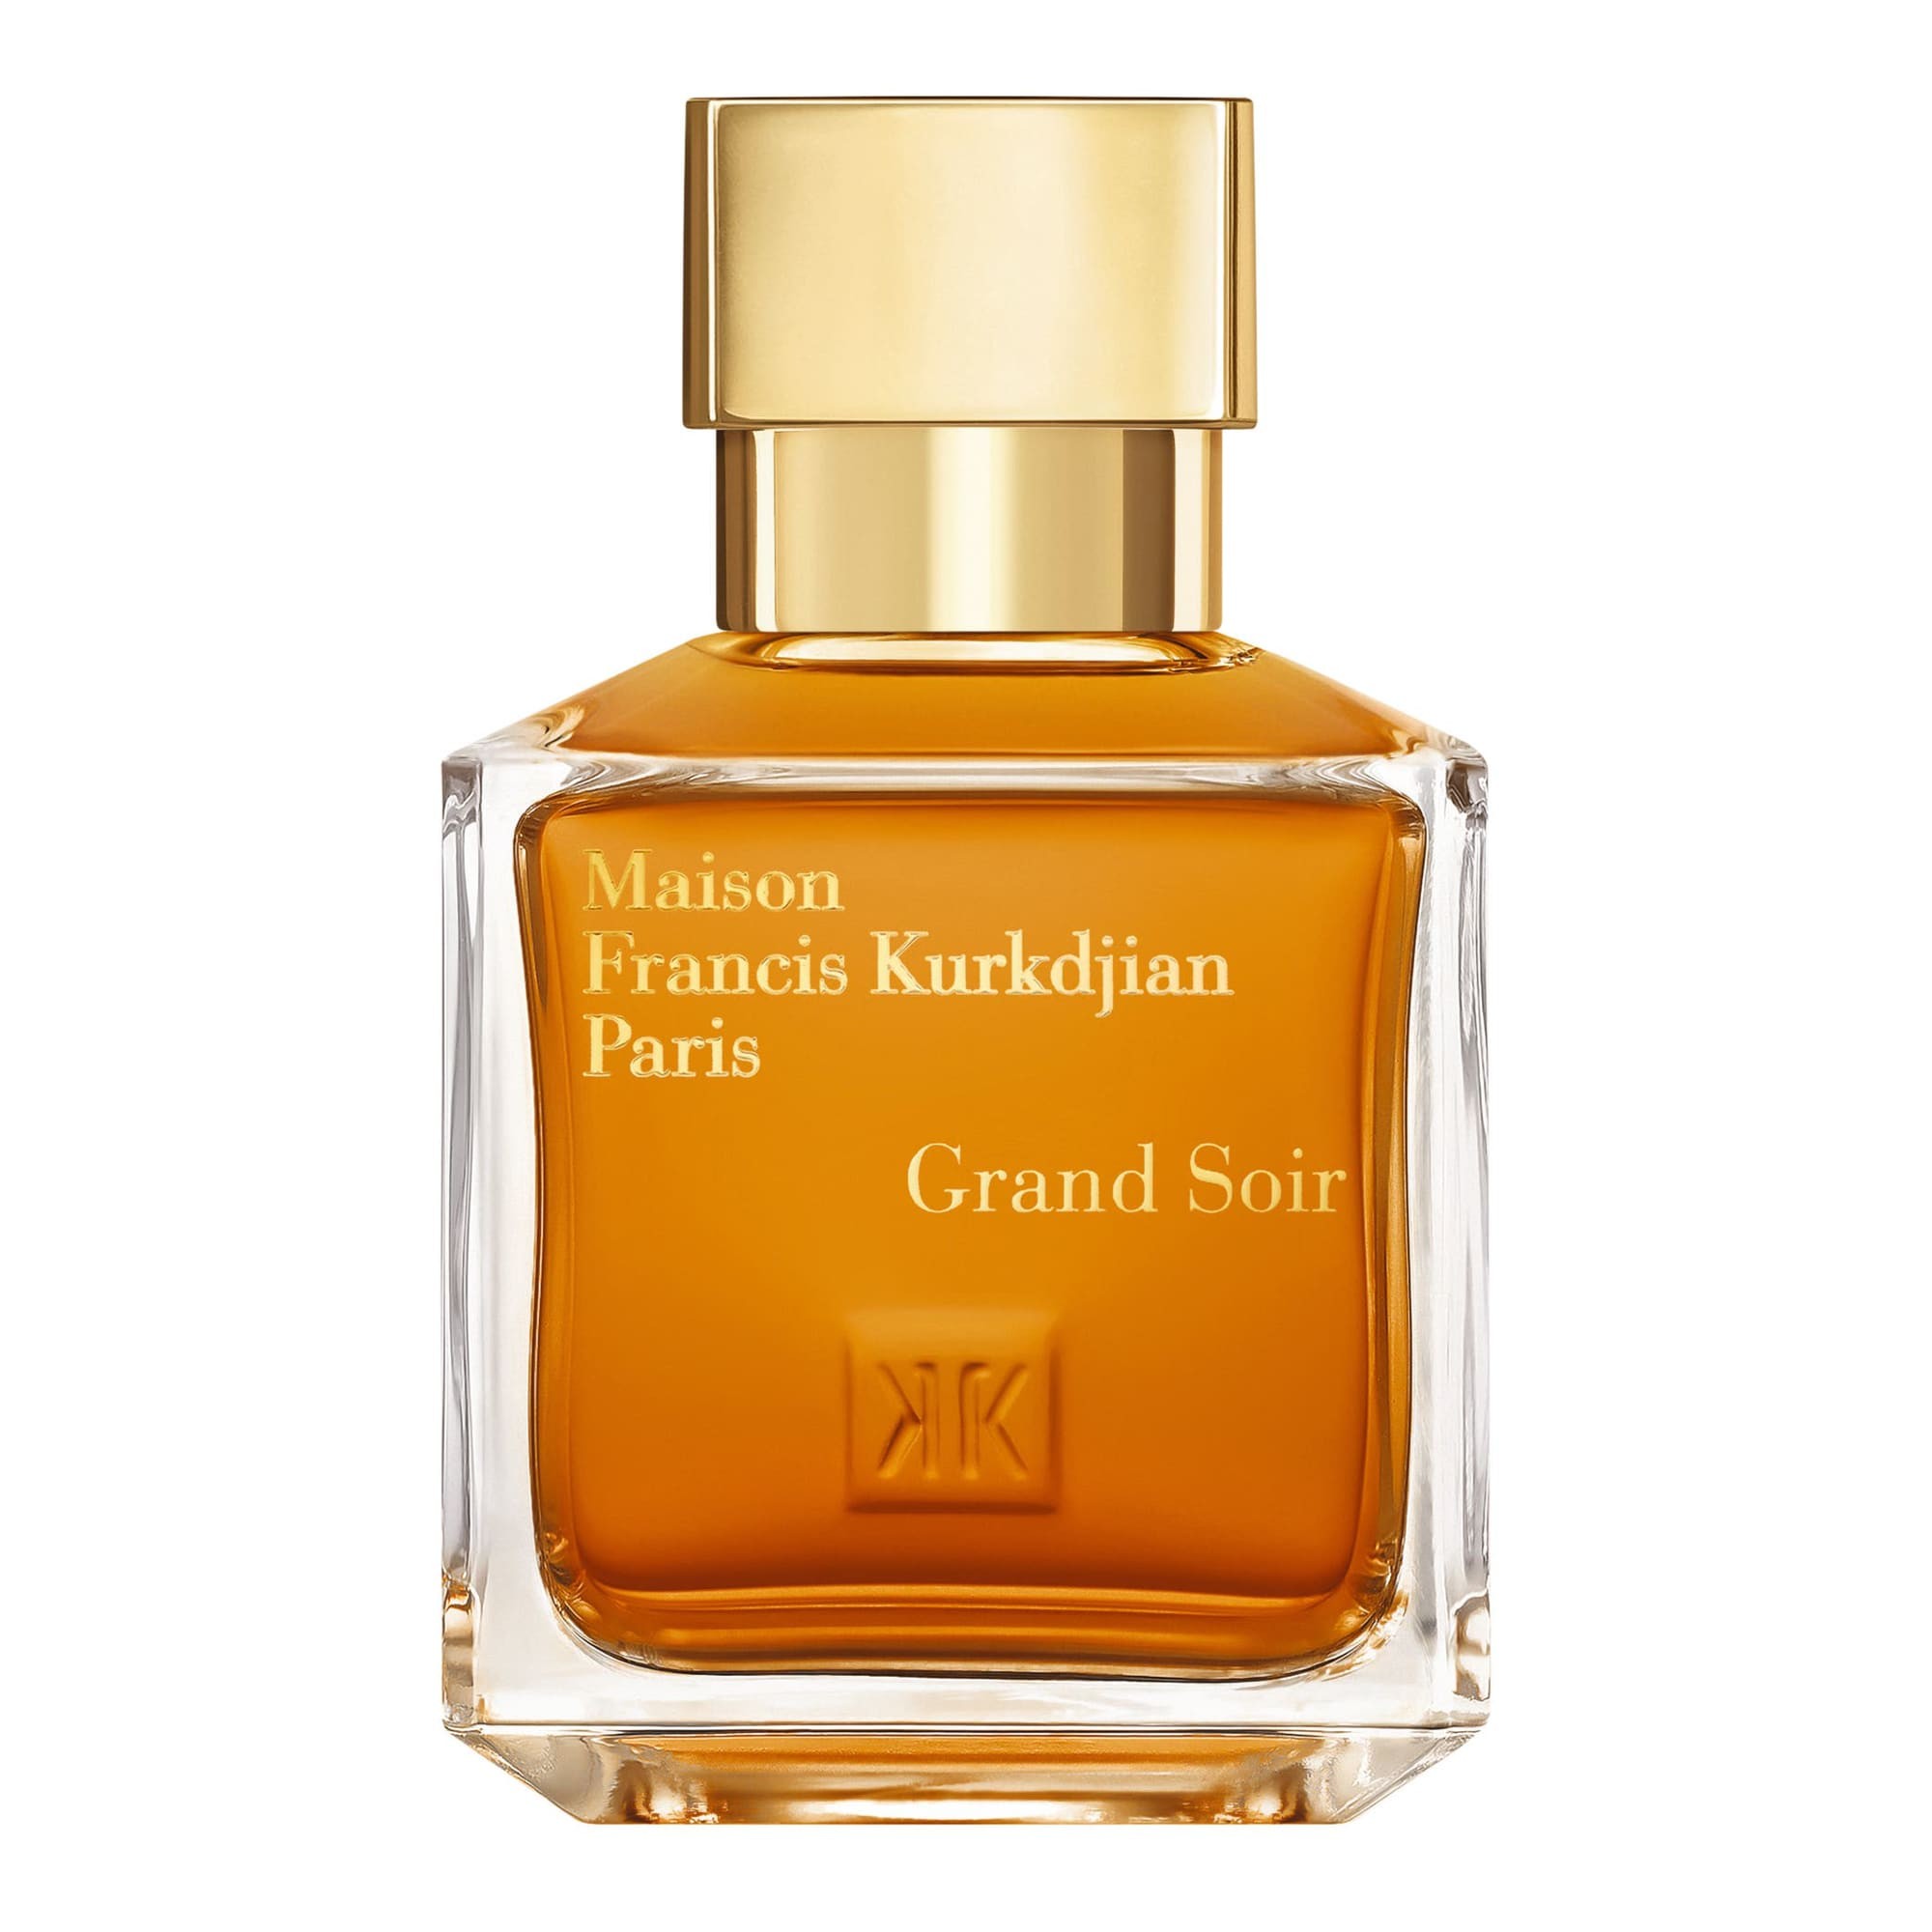 Maison Francis Kurkdjian Grand Soir Eau De Parfum 70 mL